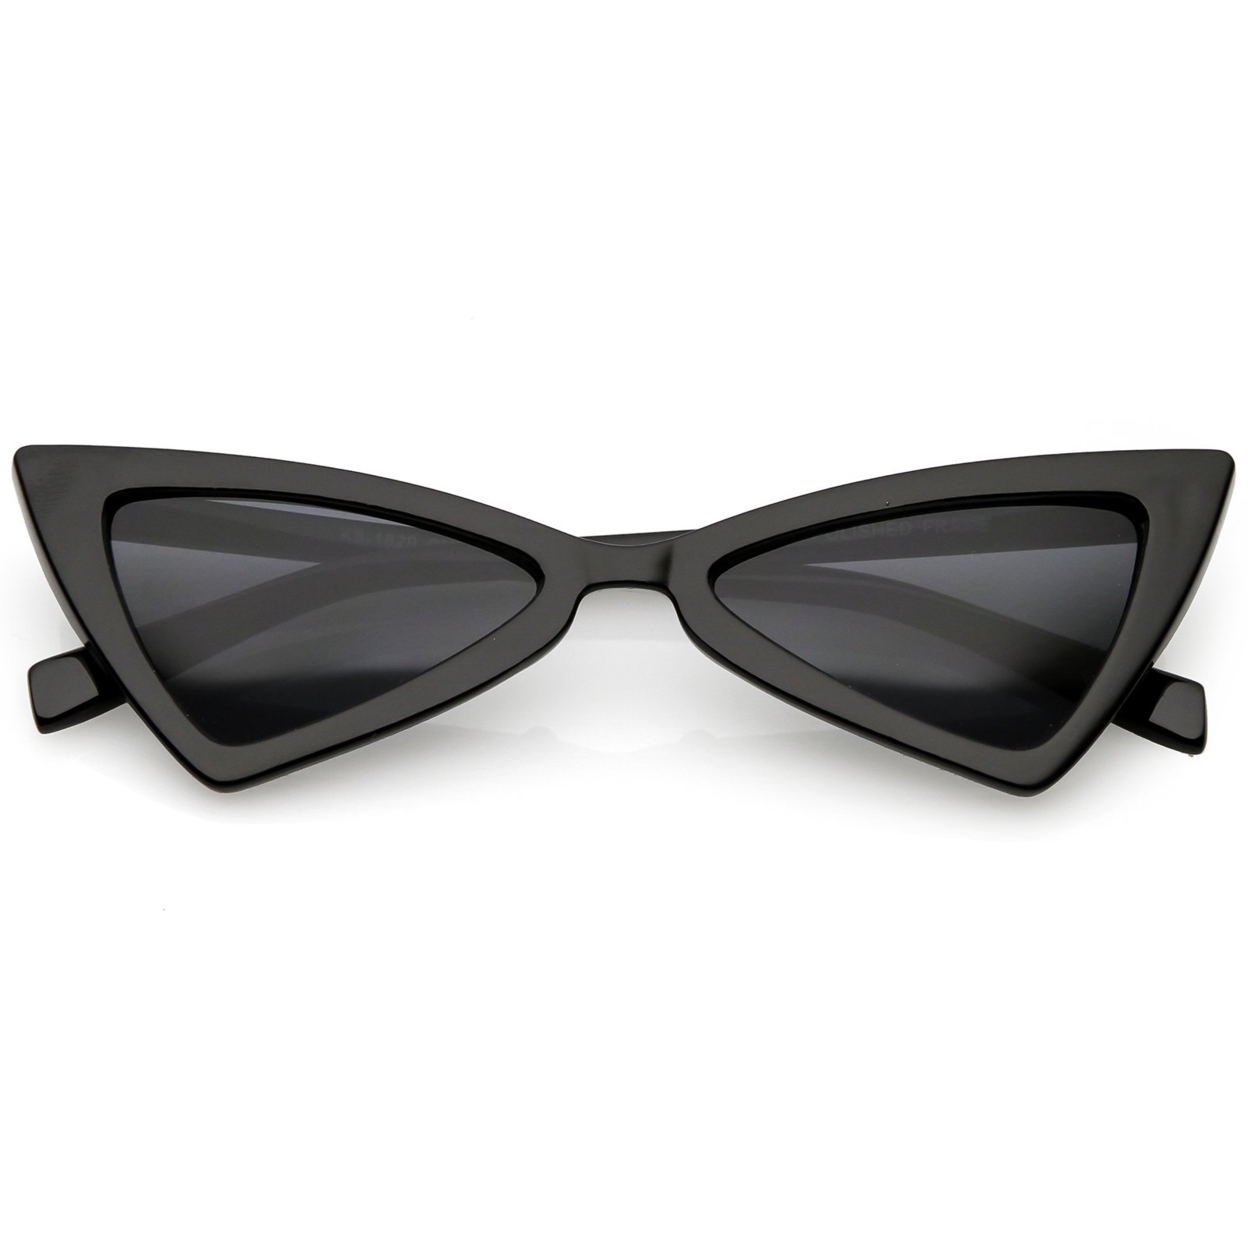 Women's Thin Extreme Cat Eye Sunglasses Neutral Colored Flat Lens 51mm - White / Smoke